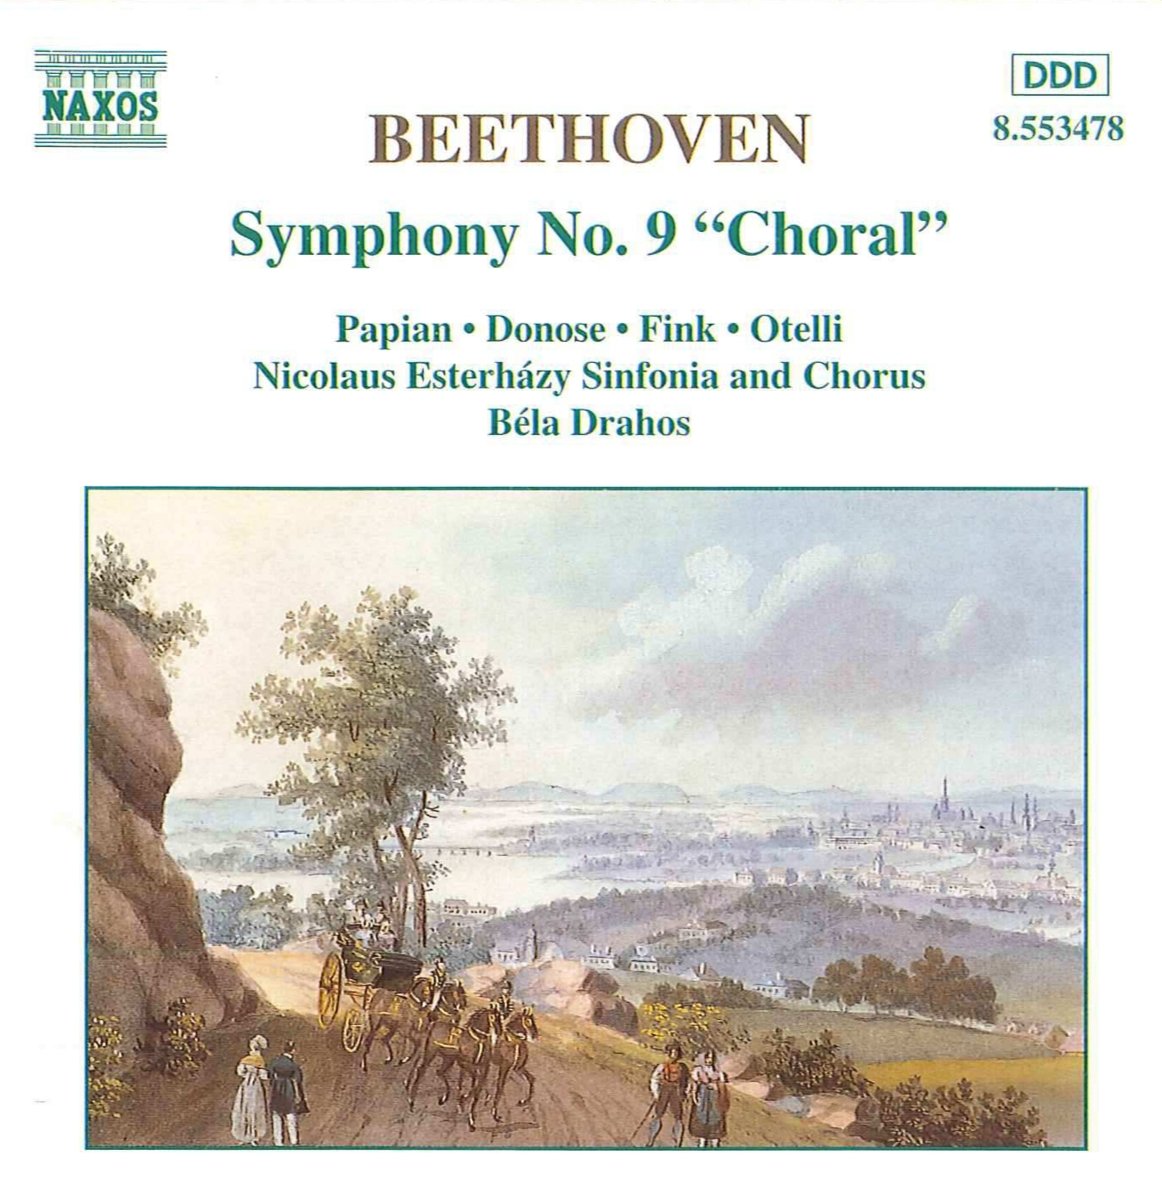 BEETHOVEN: Symphony no.9 "CHORAL"